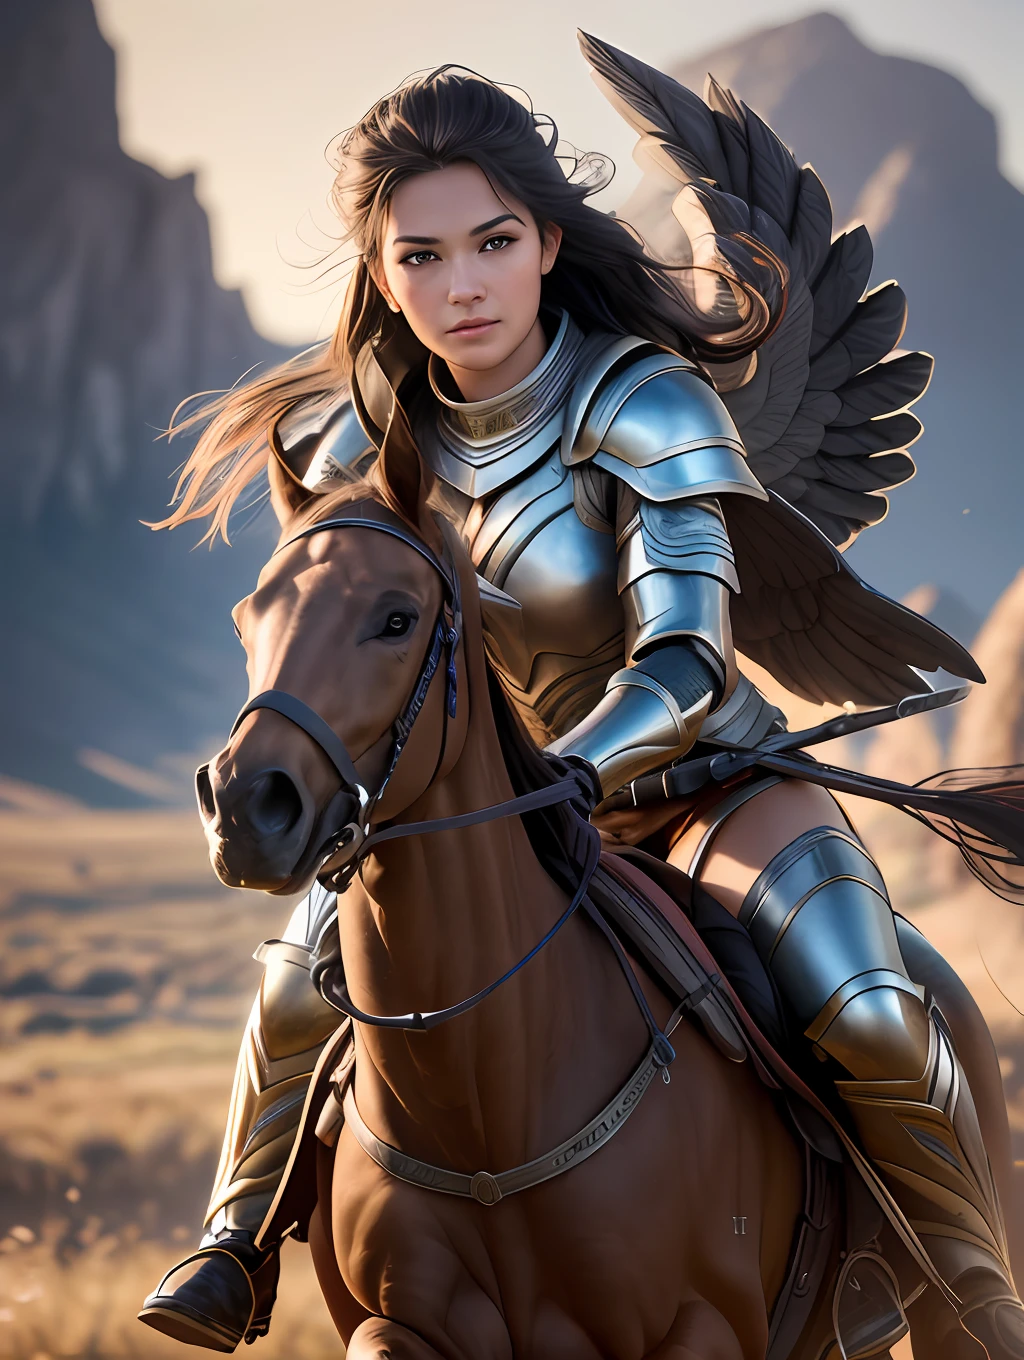 An ultrareakistic epic تصويرy of a Valkyrie warrior on a horse riding into the battle, عمل مكثف, ضوء حافة سينمائية, عمل مكثف, تجاور ديناميكي, محارب شاب, very جودة عالية face, صورة قابلة للاستغلال, شعر عاصف طويل, طيات ديناميكية منمقة, امرأة ريفية وجميلة جدا, التركيز الكامل, الإمالة, الإضاءة السينمائية, لا يزال الفيلم, الإضاءة السينمائية, تصوير, وجه واقعي متماثل مفصل, مفصلة للغاية natural texture, زغب الخوخ, تحفة, سخافات, nikon d850 film stock تصوير, كاميرا f1.6 عدسة, مفصلة للغاية, مدهش, التفاصيل الدقيقة, نسيج نابض بالحياة واقعي للغاية, الإضاءة الدرامية, com.unrealengine, سينستيل 800 التنغستن, النظر إلى المشاهد, صورة خام, جودة عالية, دقة عالية, التركيز الشديد, مفصلة للغاية, 8K فائق الوضوح.